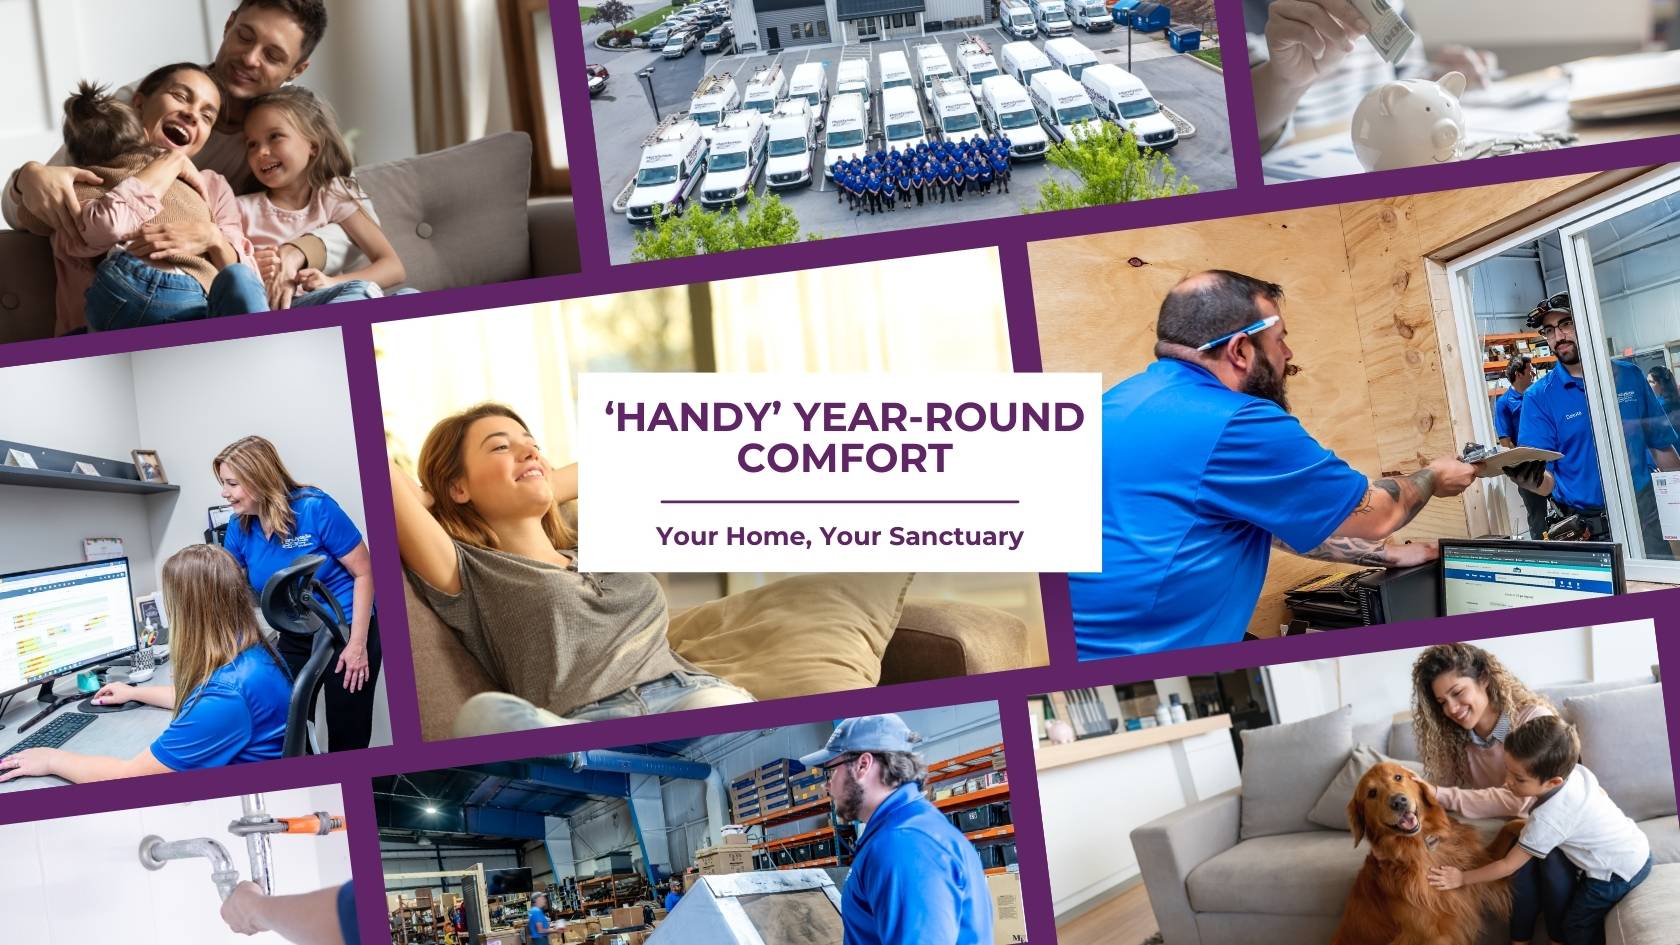 Handyside year-round comfort